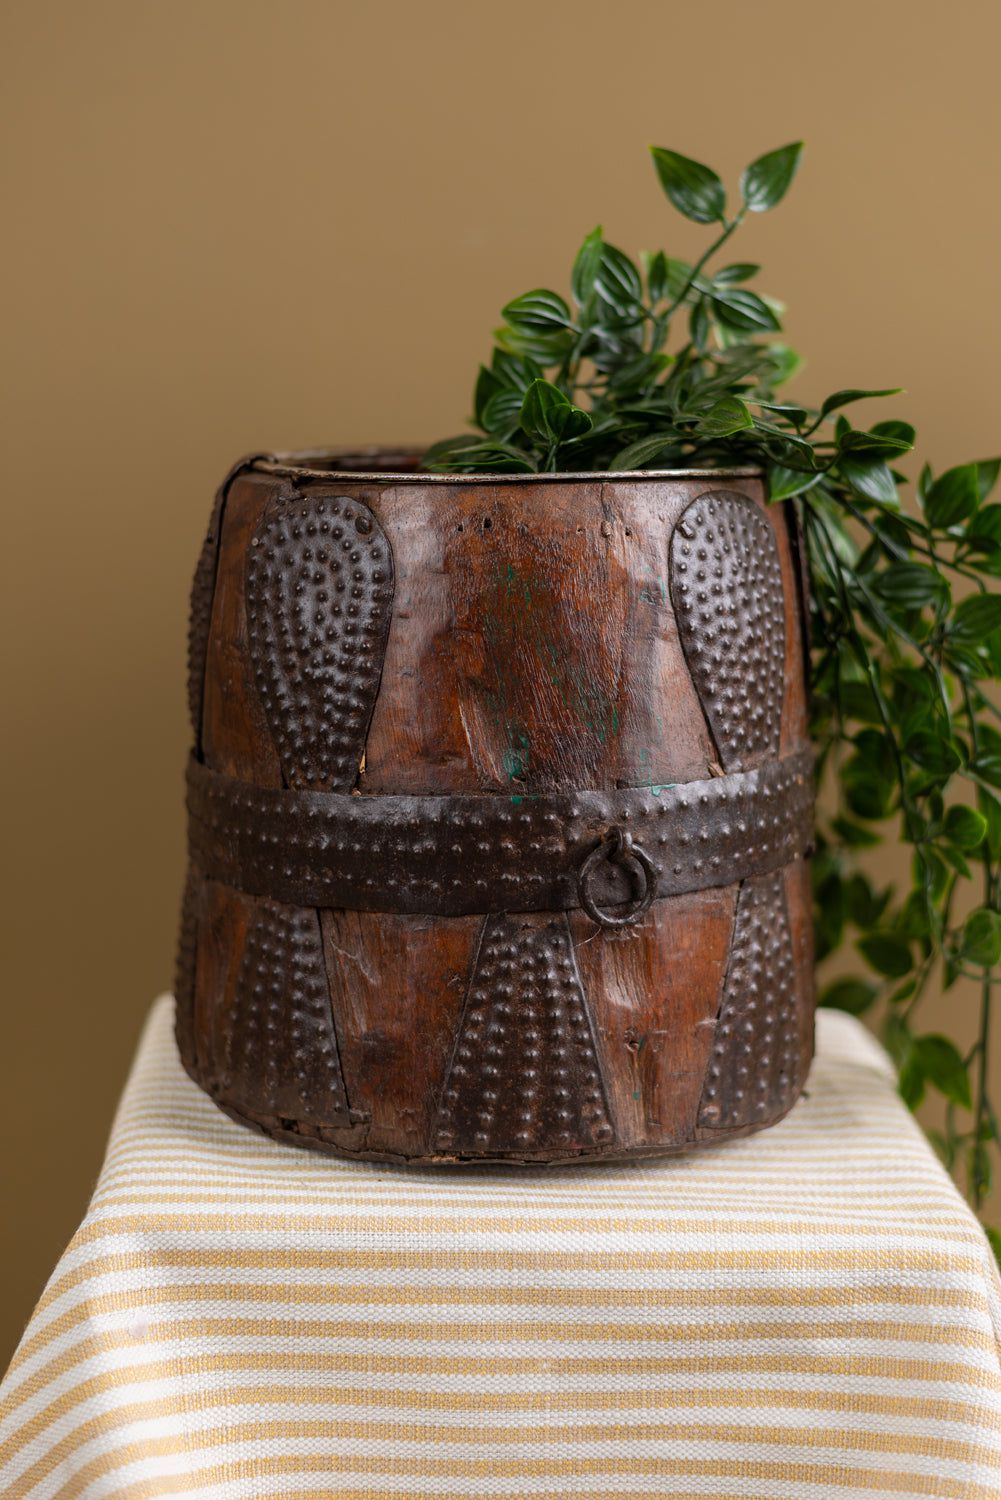 Ian Snow Ltd Wooden Vintage Barrel Pots - 02